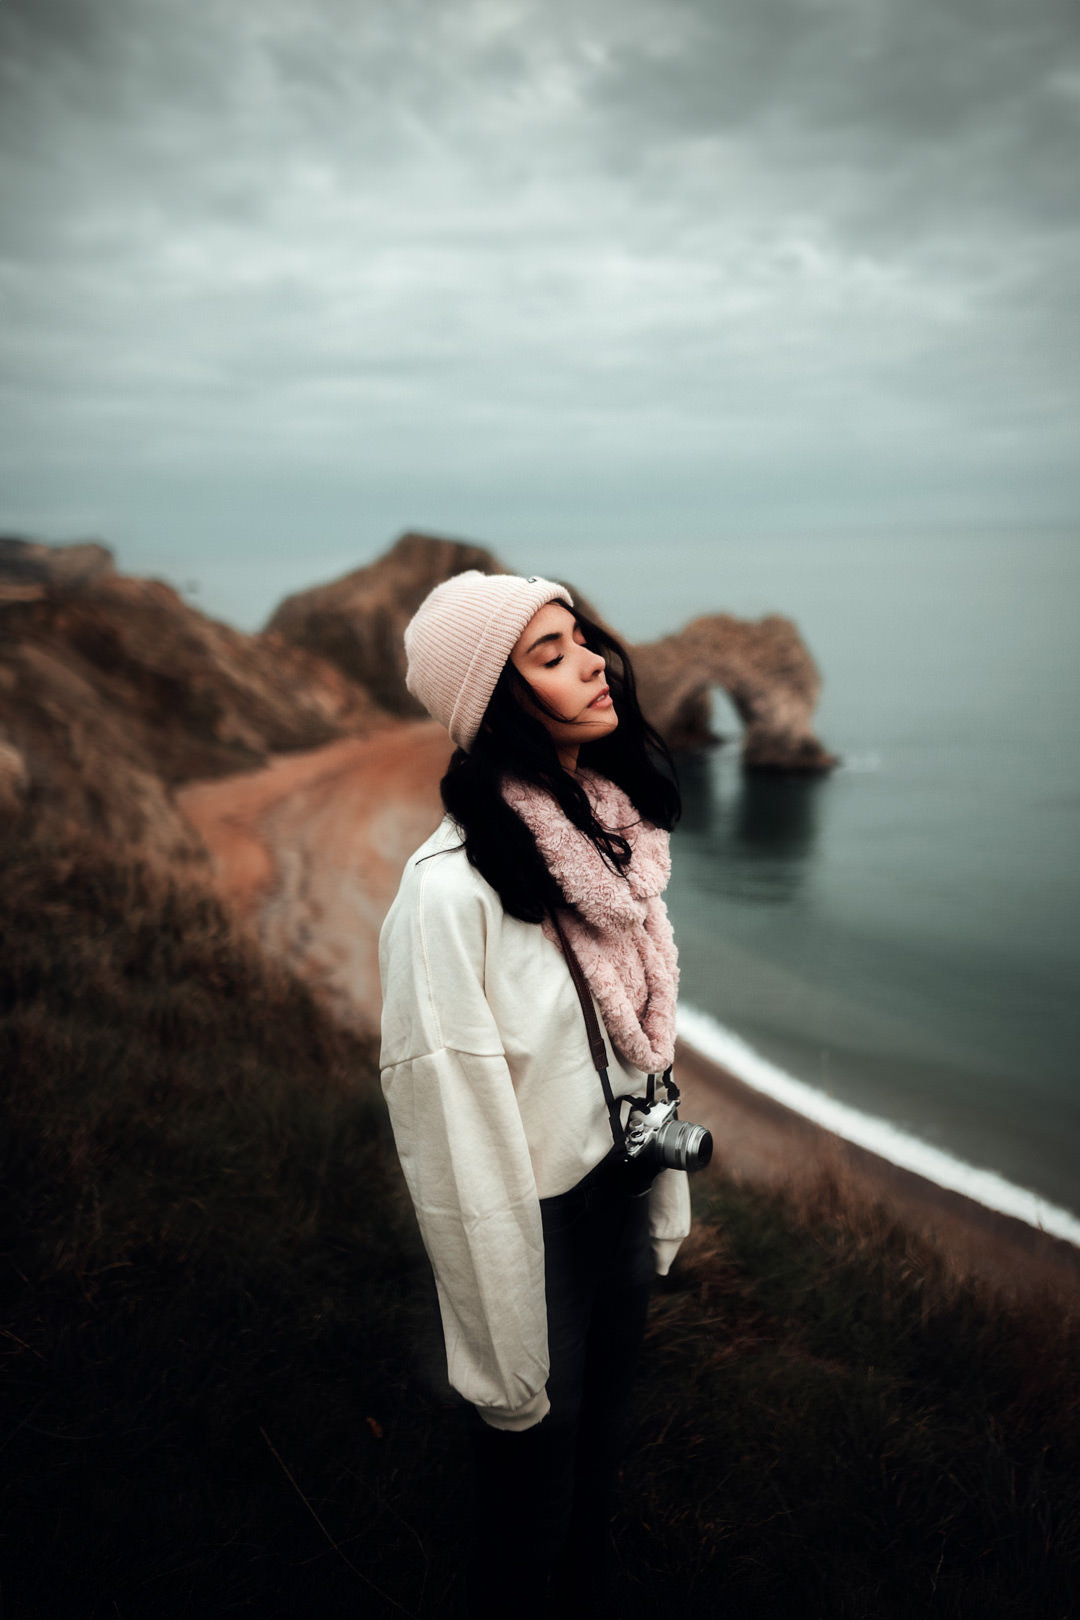 girl stood on cliff edge holding camera